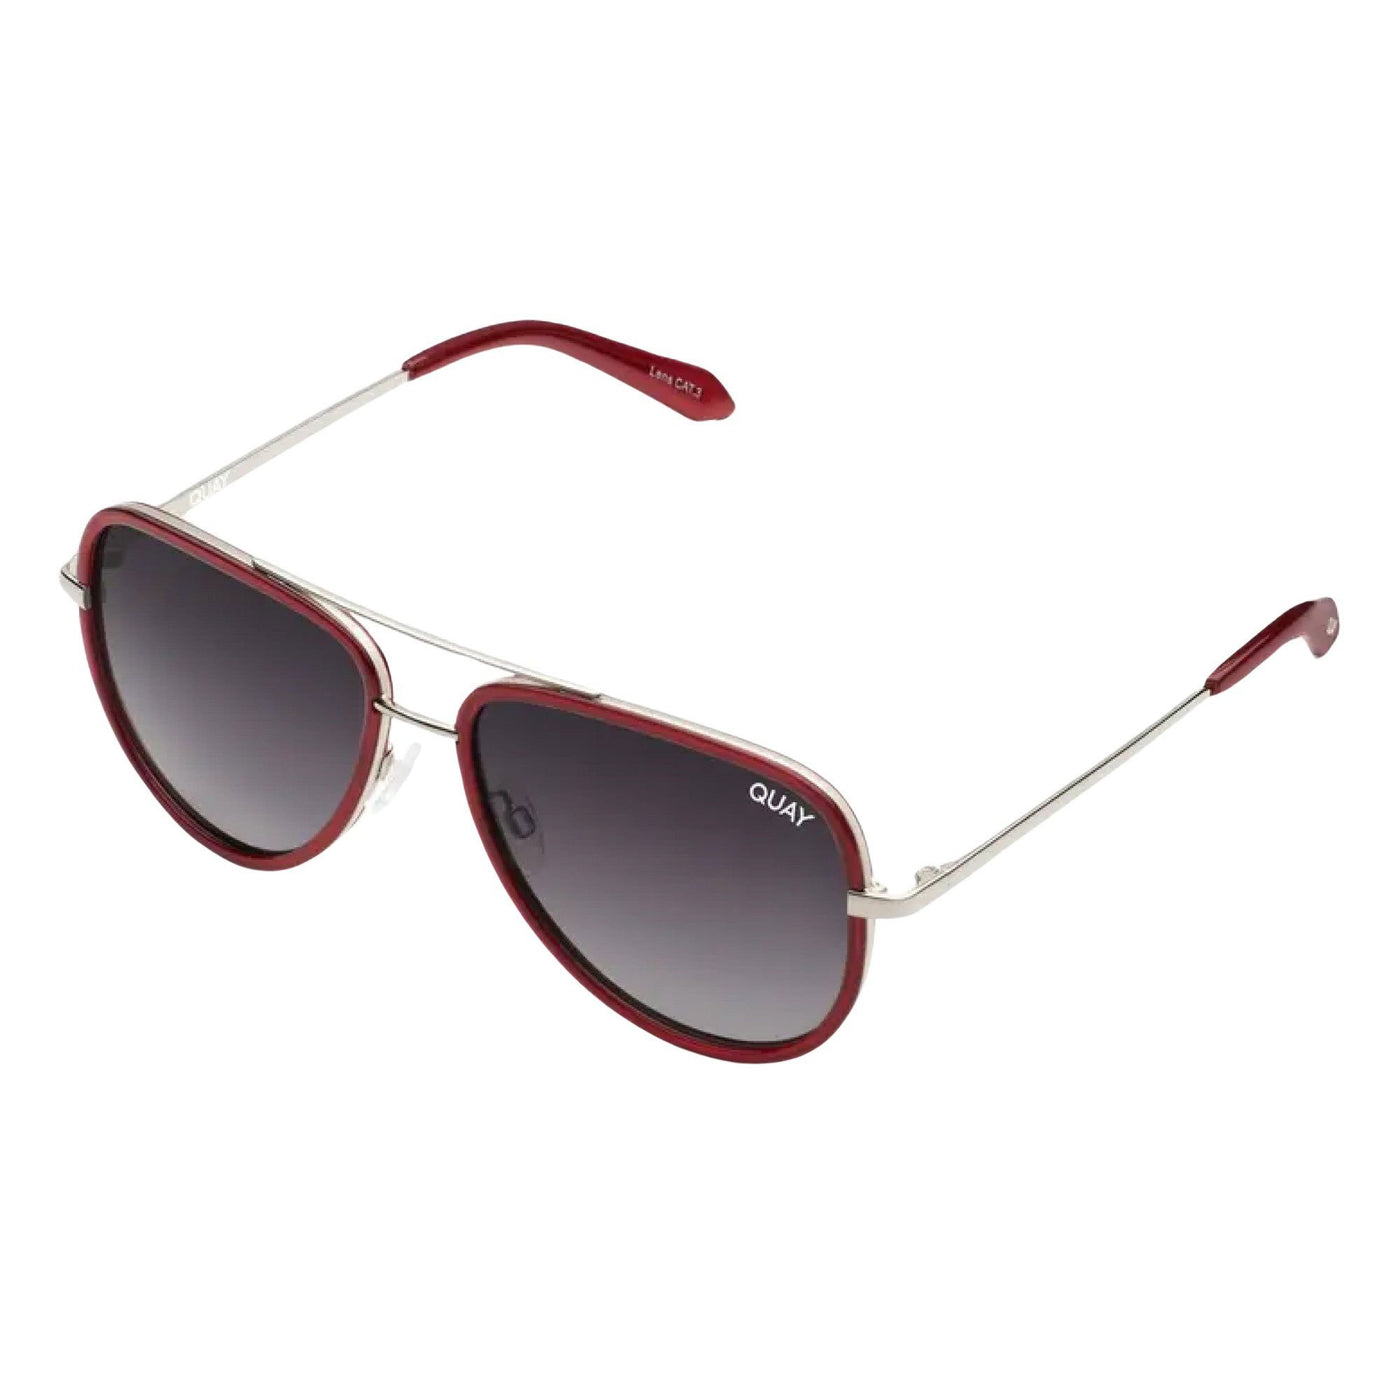 Quay Women's All In Mini Small Retro Aviator Sunglasses - Brown Frame/Smoke Polarized Lens - 3/4 angle